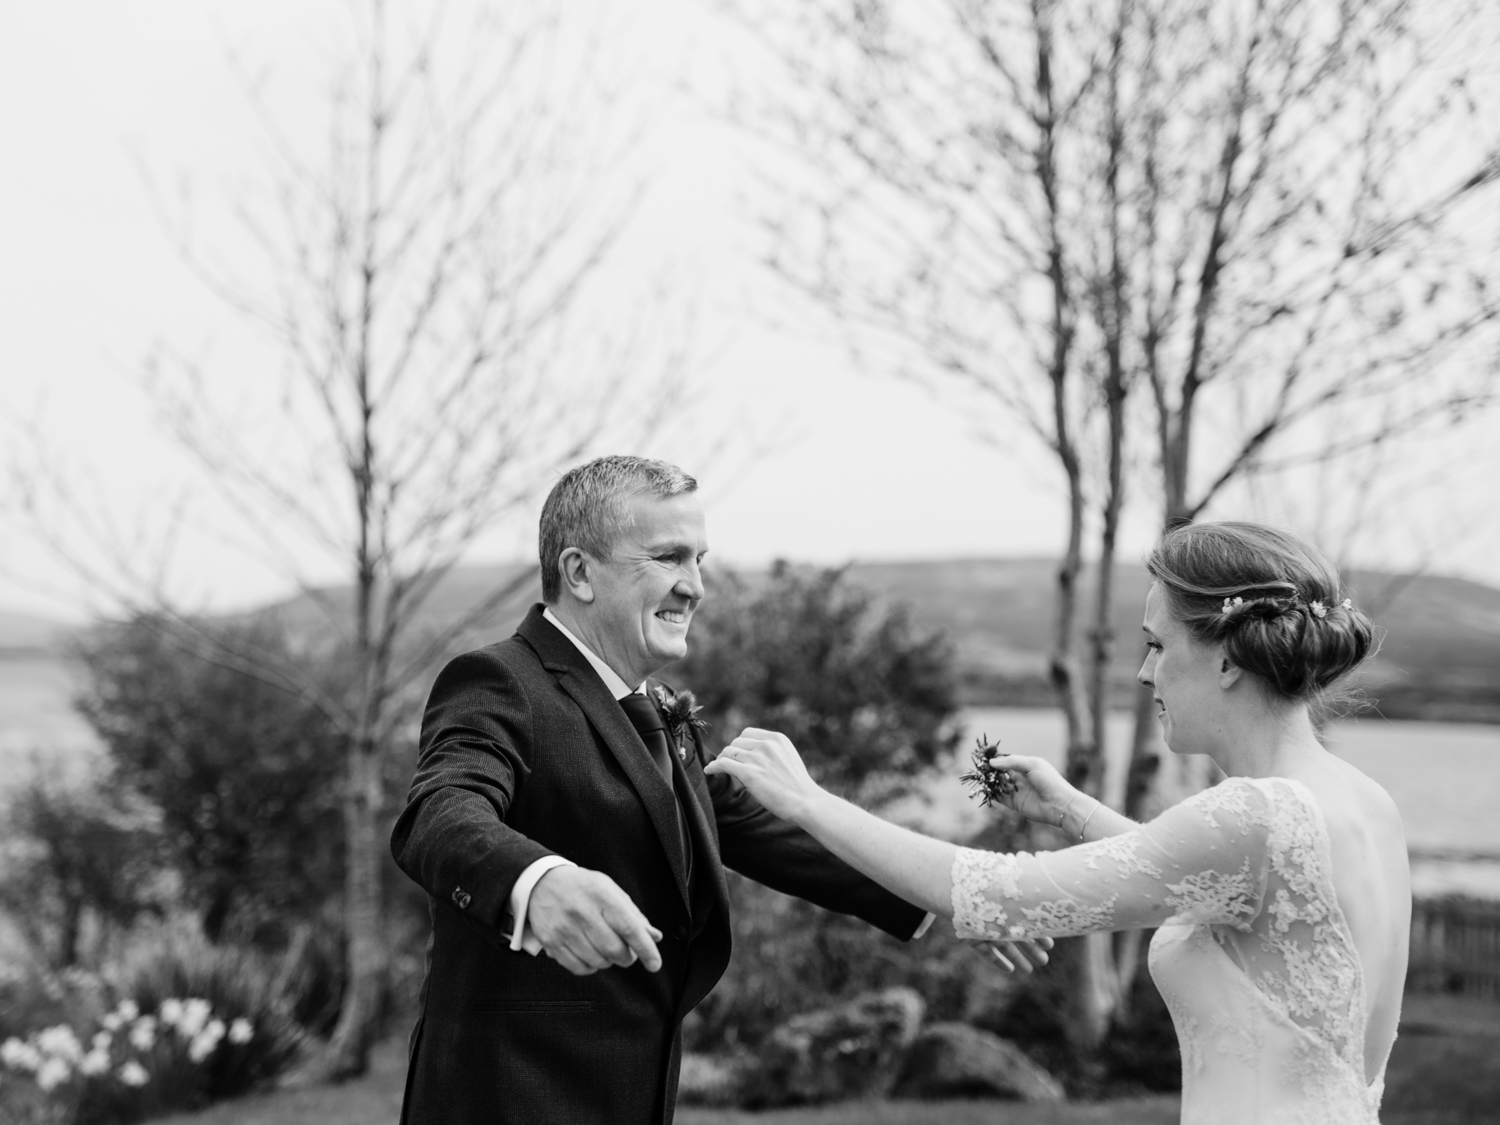 capyture-wedding-photographer-destination-nature-intimate-wedding-isle-of-skye-scotland-137